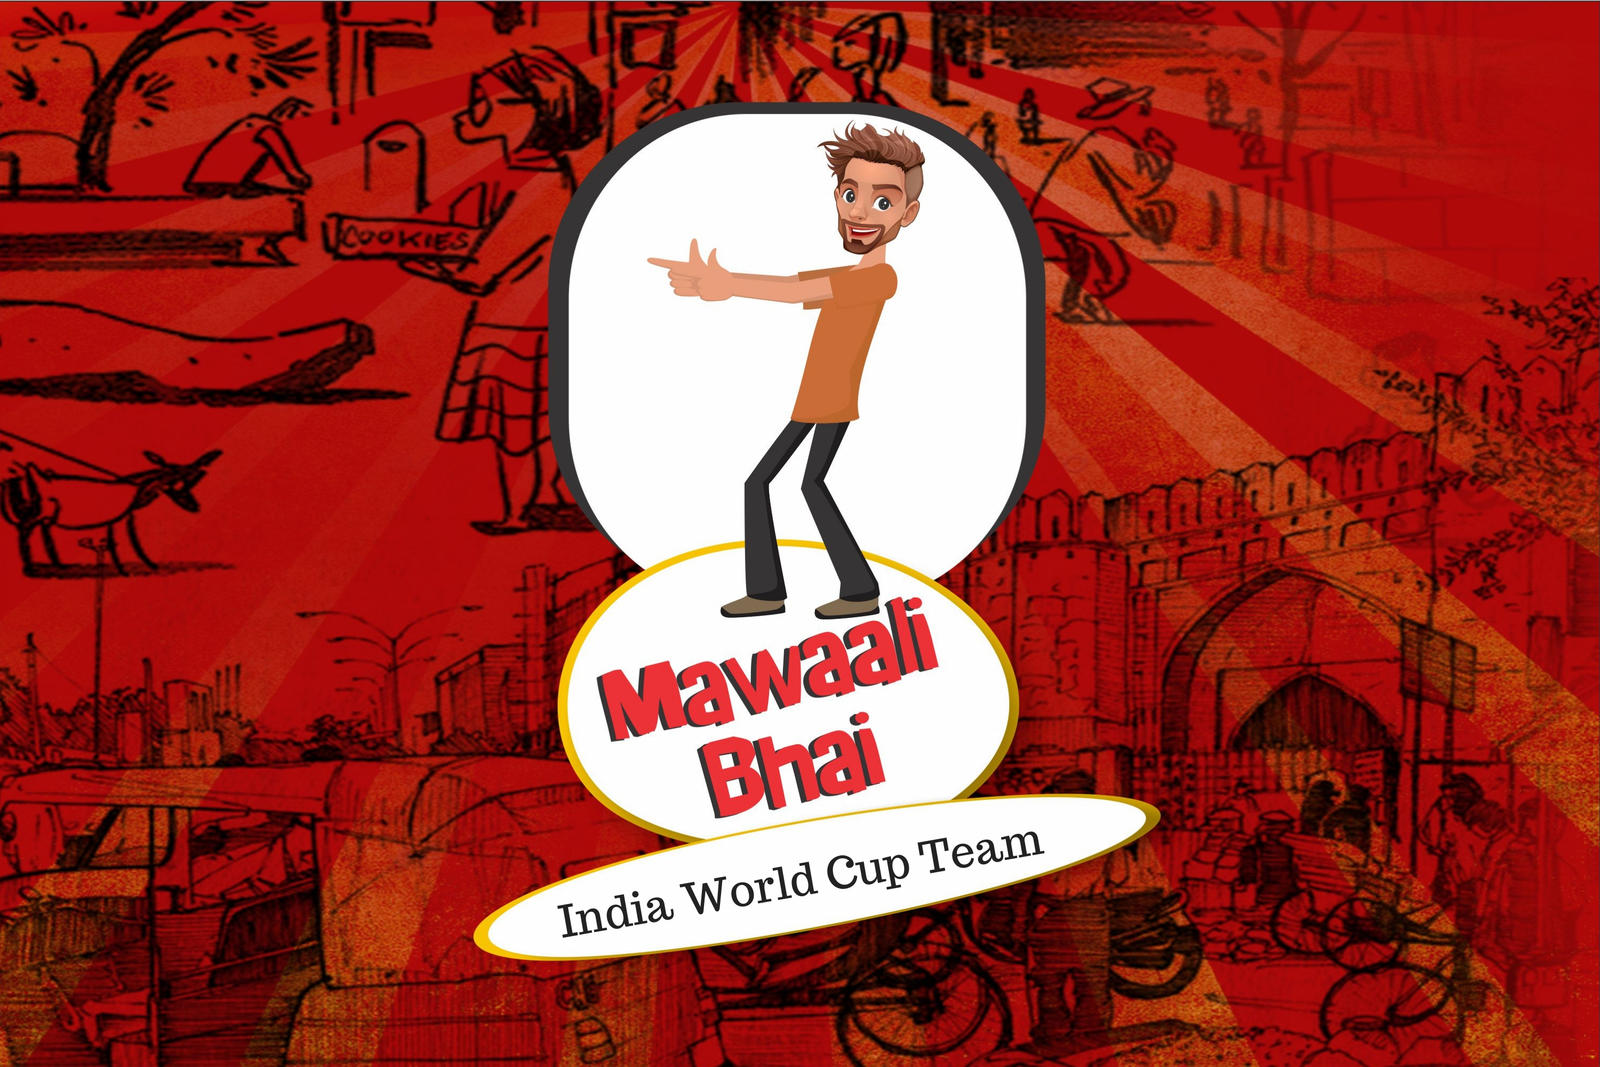 Mawaali Bhai - India World Cup Team